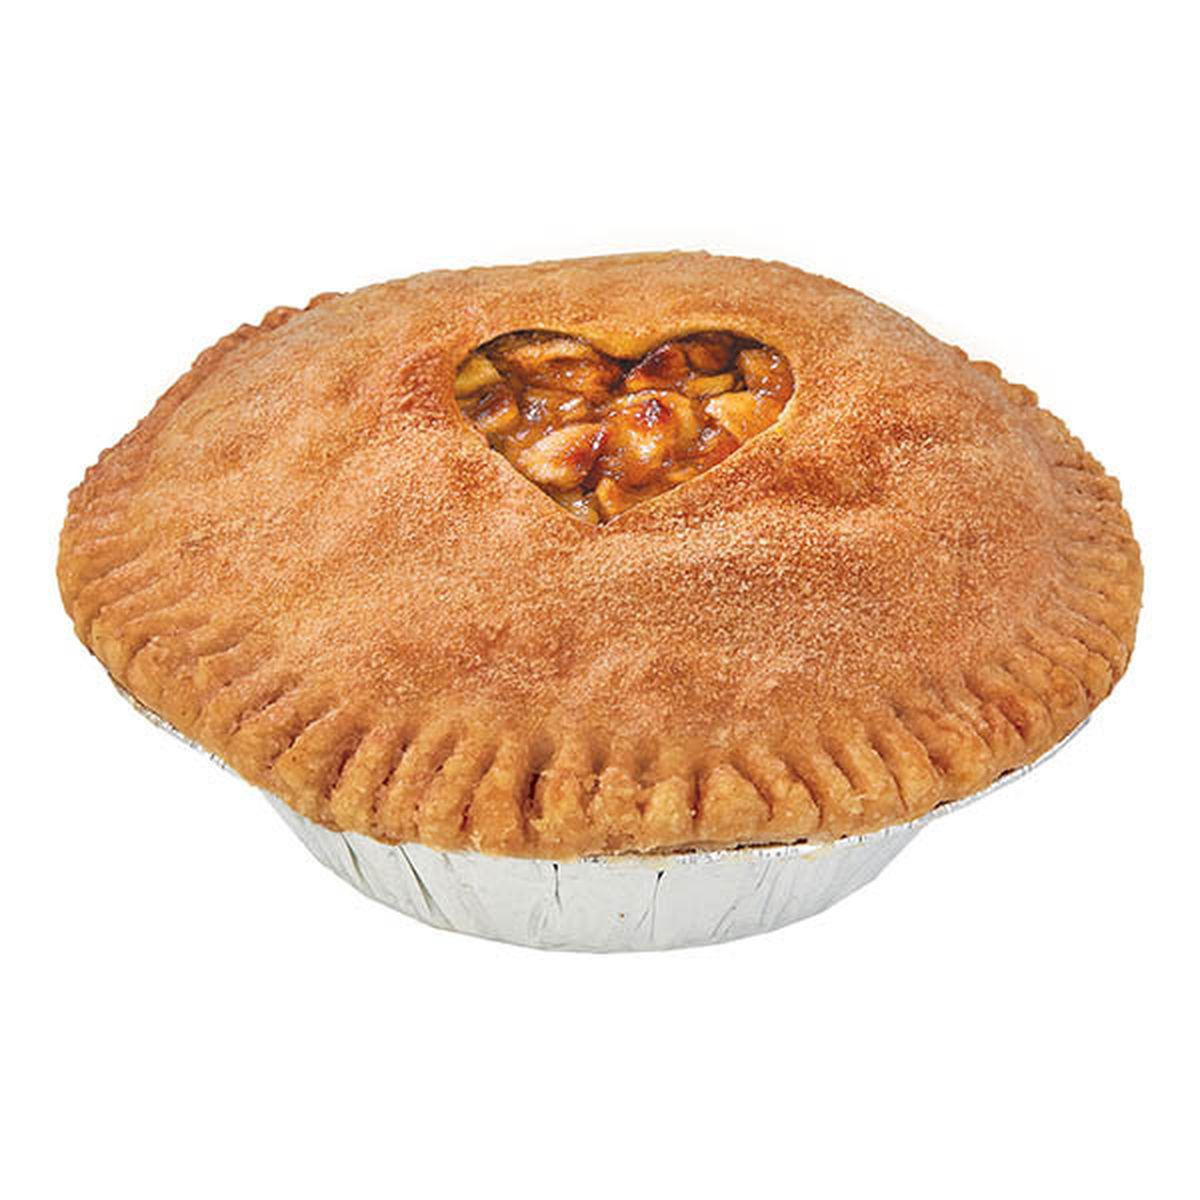 Calories in Wegmans Mini Apple Pie